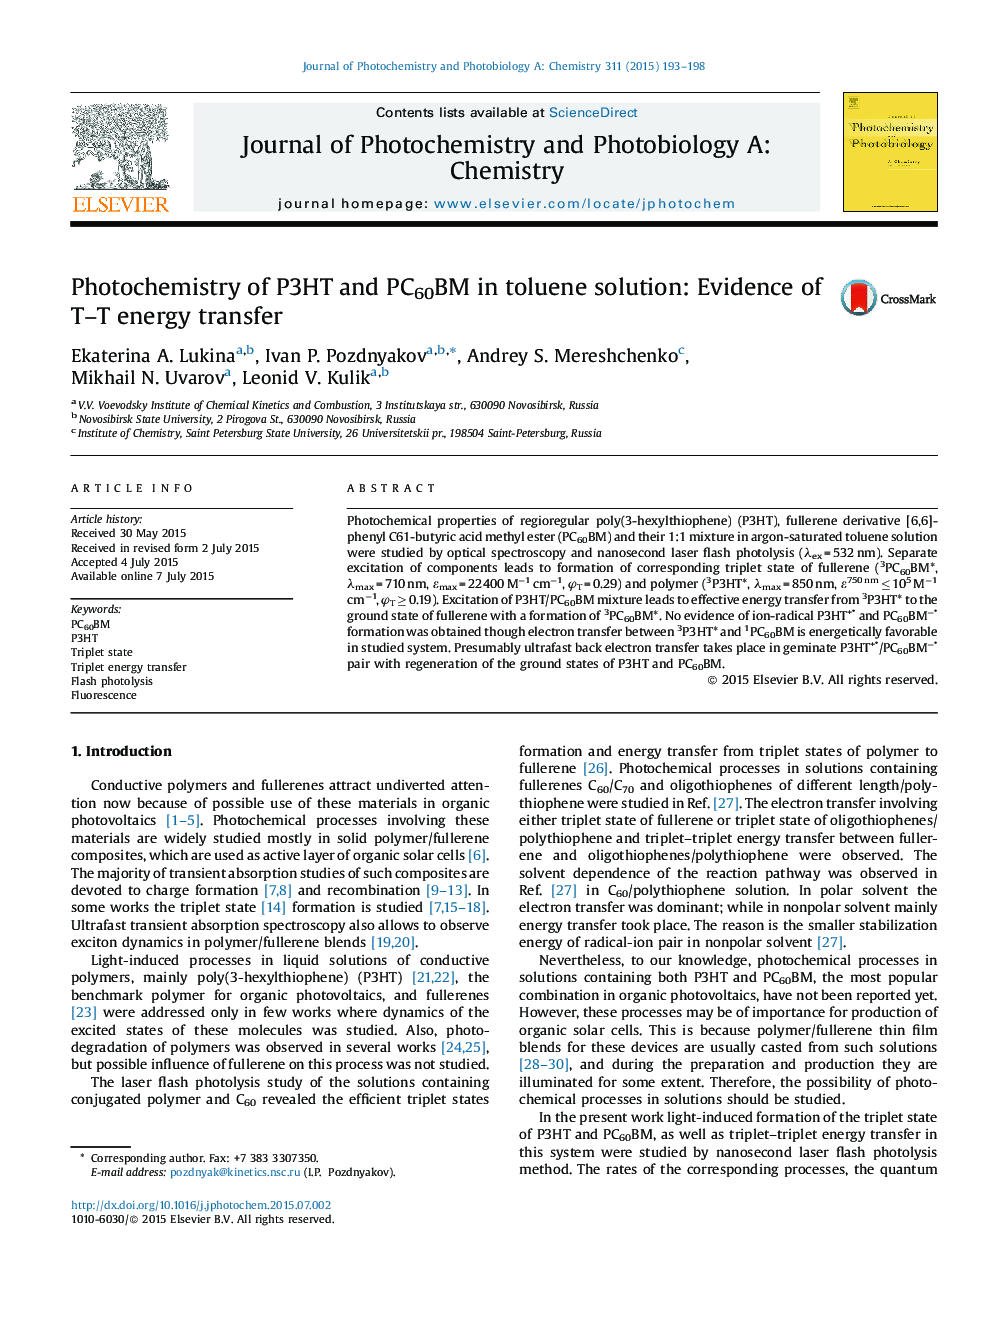 Photochemistry of P3HT and PC60BM in toluene solution: Evidence of T–T energy transfer